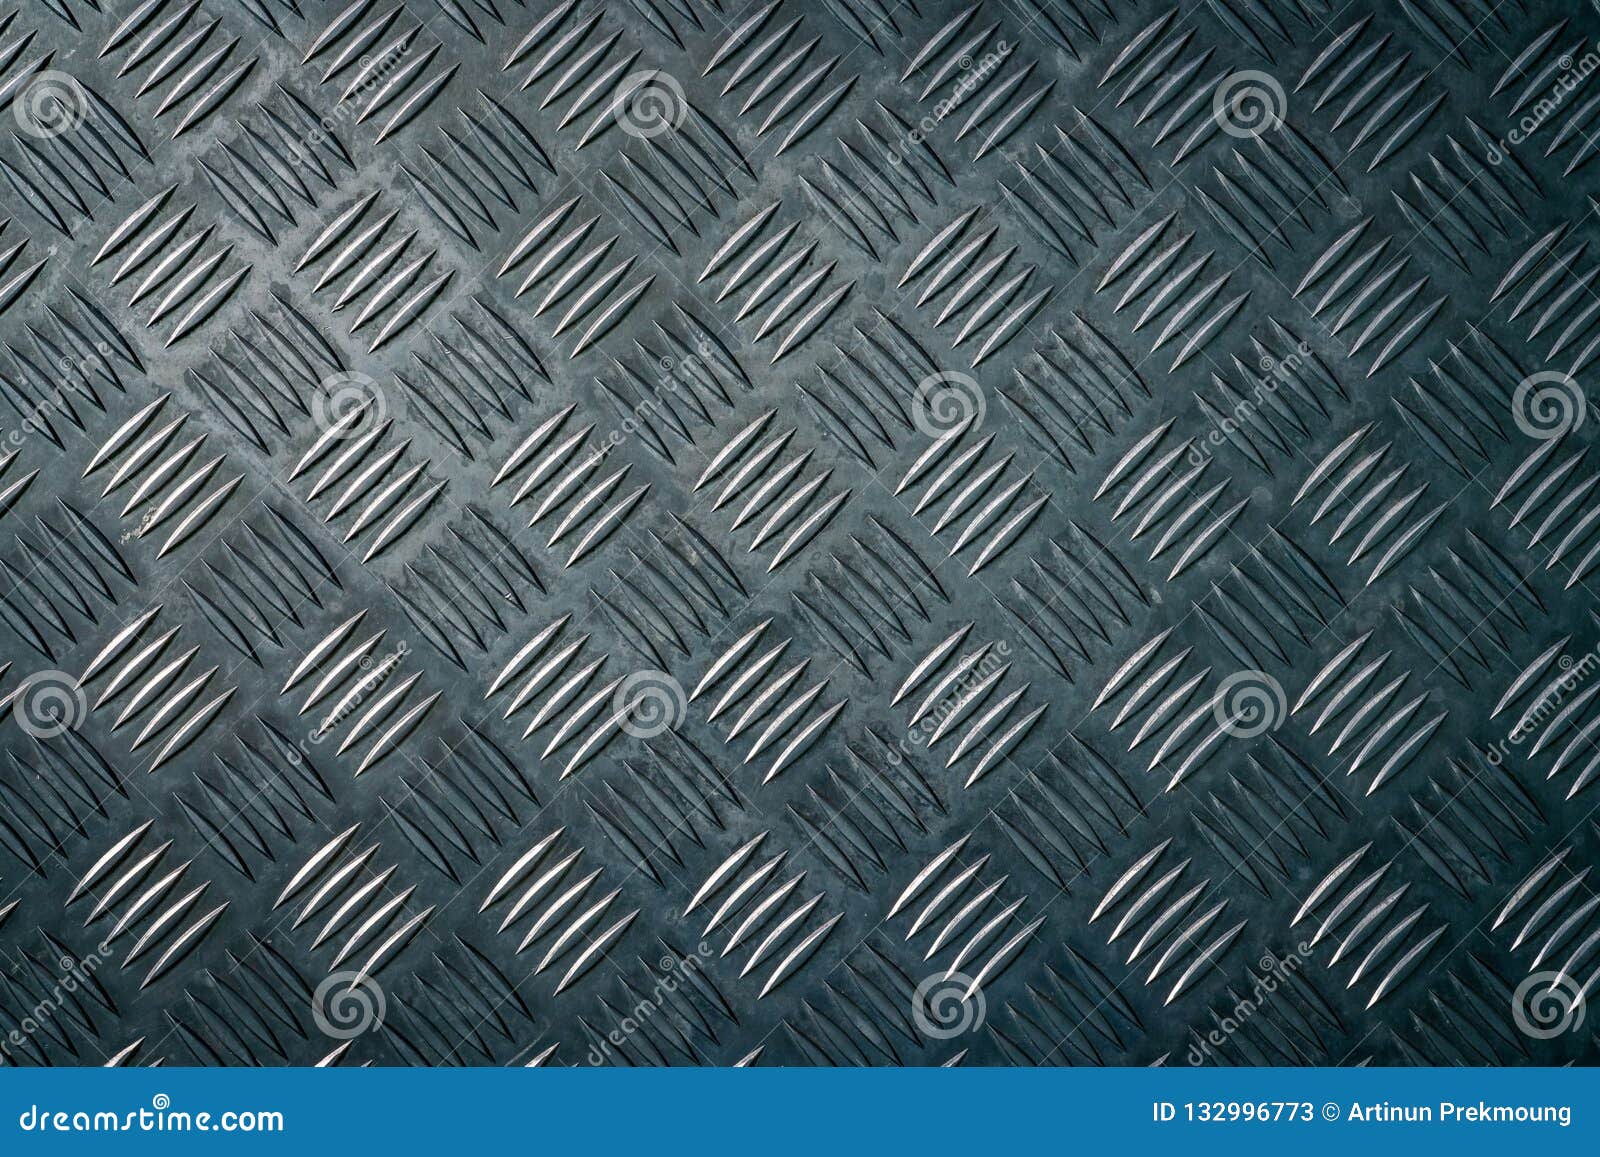 industrial metal checker plate. metal checker plate texture background. metal checkerplate for anti skid. embossed metal sheet